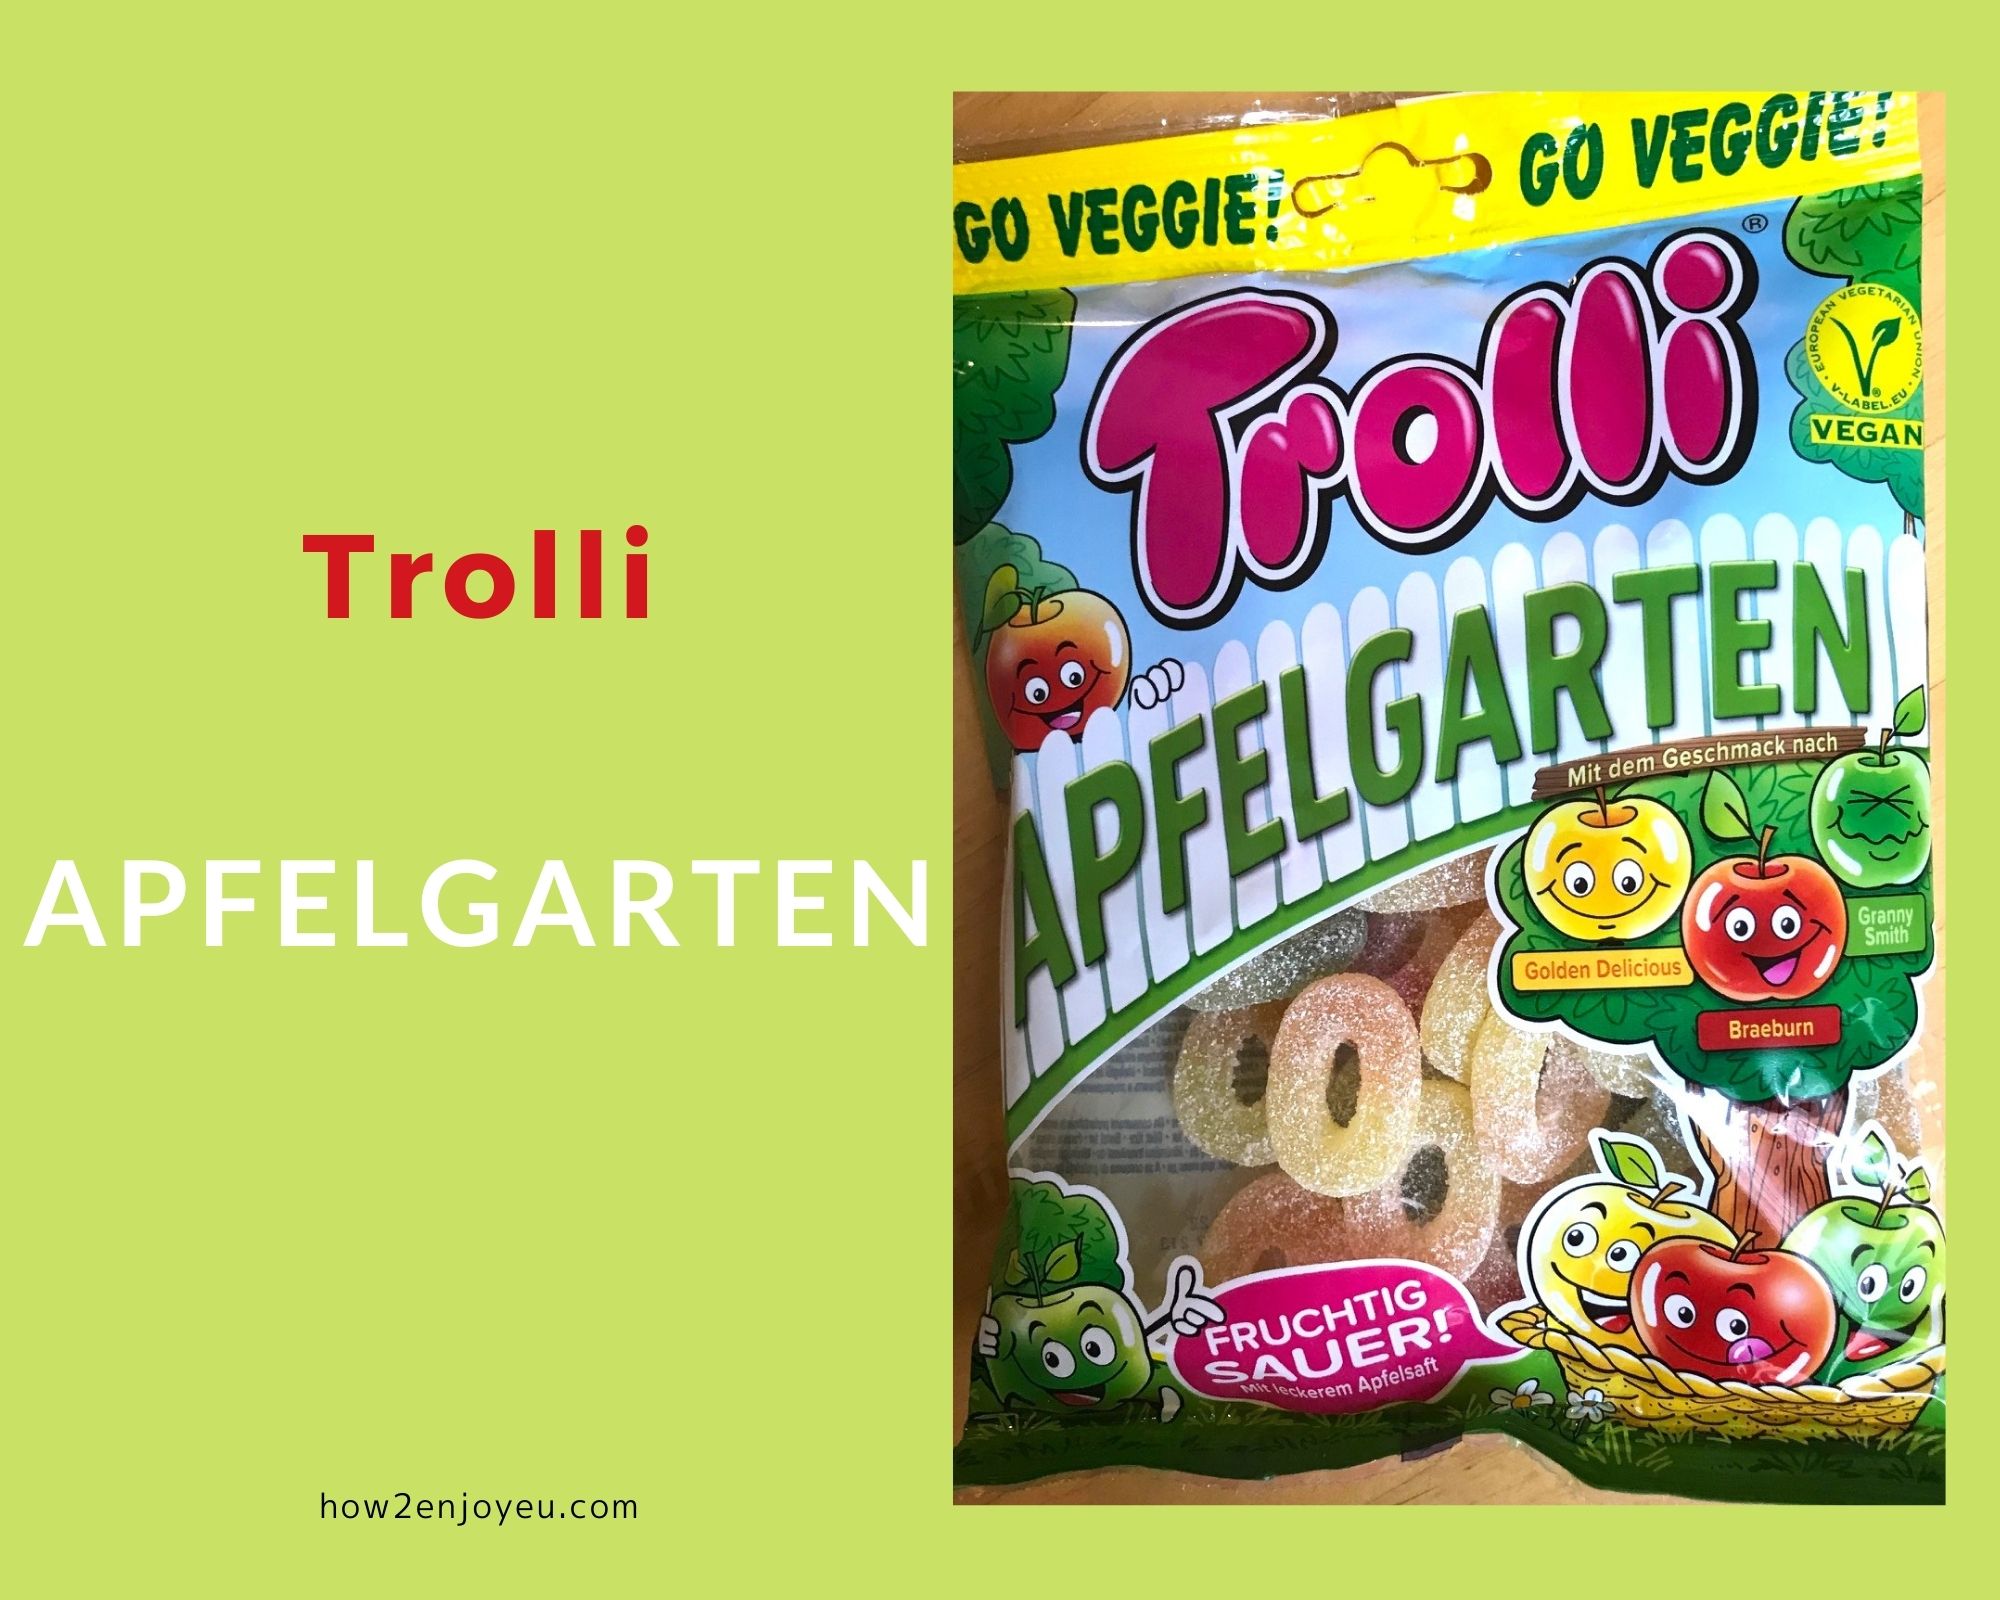 You are currently viewing ヴィーガンの人も食べられるベジグミ、【Trolli Apfelgarten】